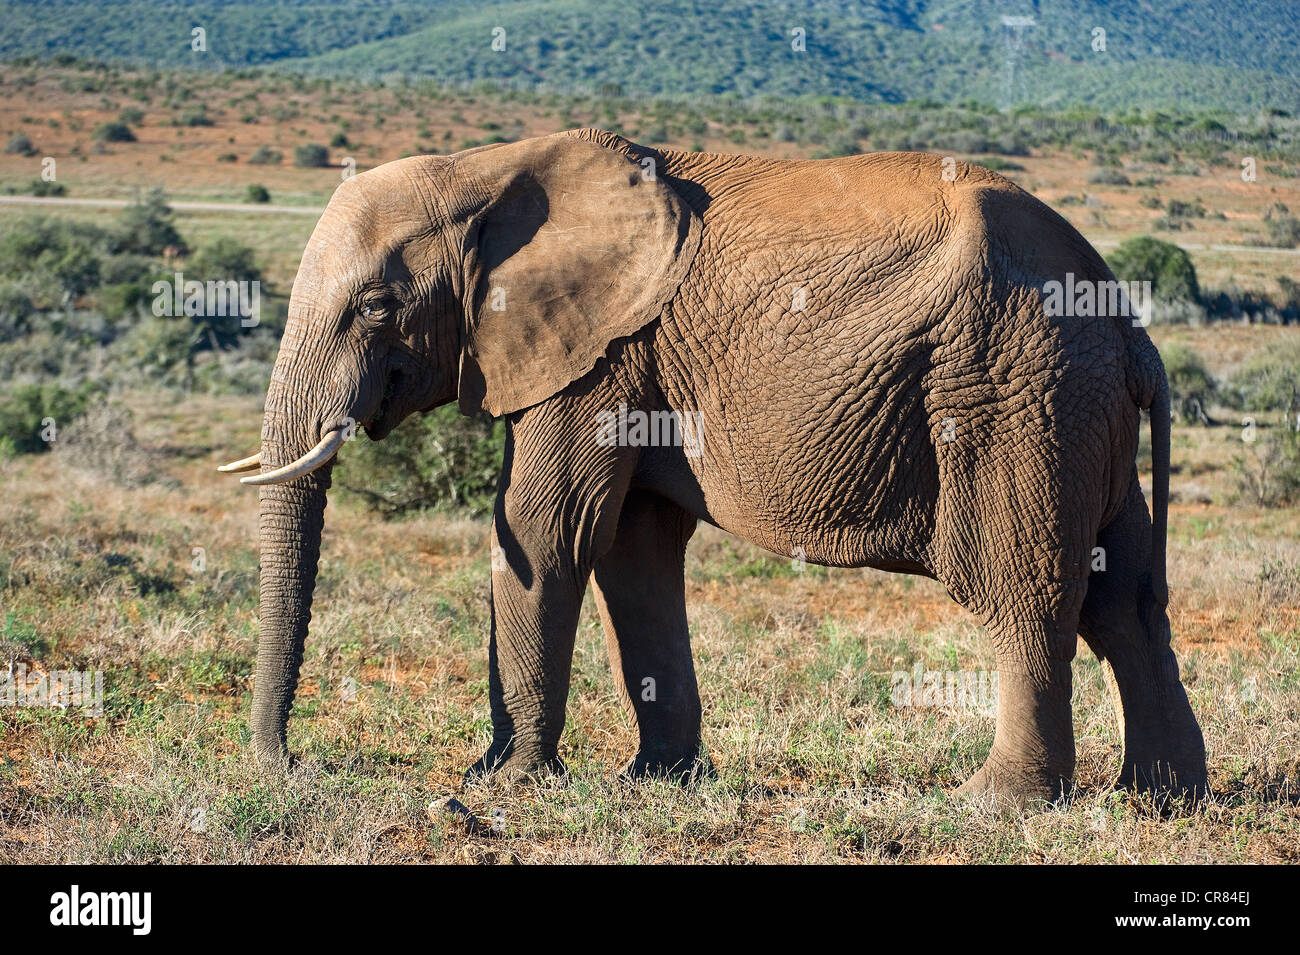 South Africa, Eastern Cape, Addo Elephant National Park, elephant Stock Photo